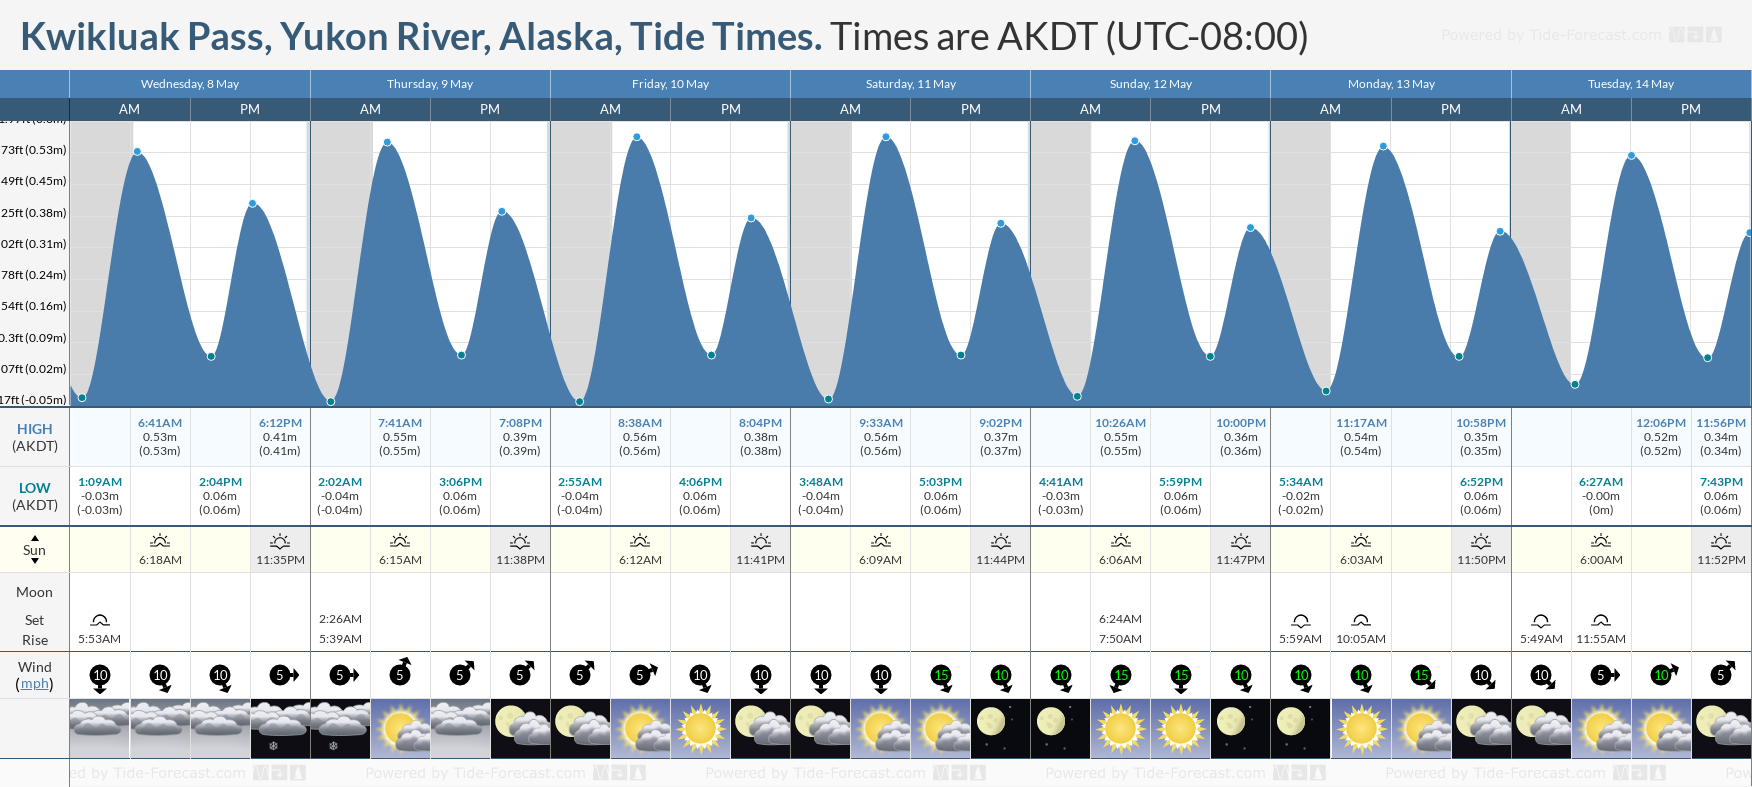 Kwikluak Pass, Yukon River, Alaska Tide Chart including high and low tide tide times for the next 7 days